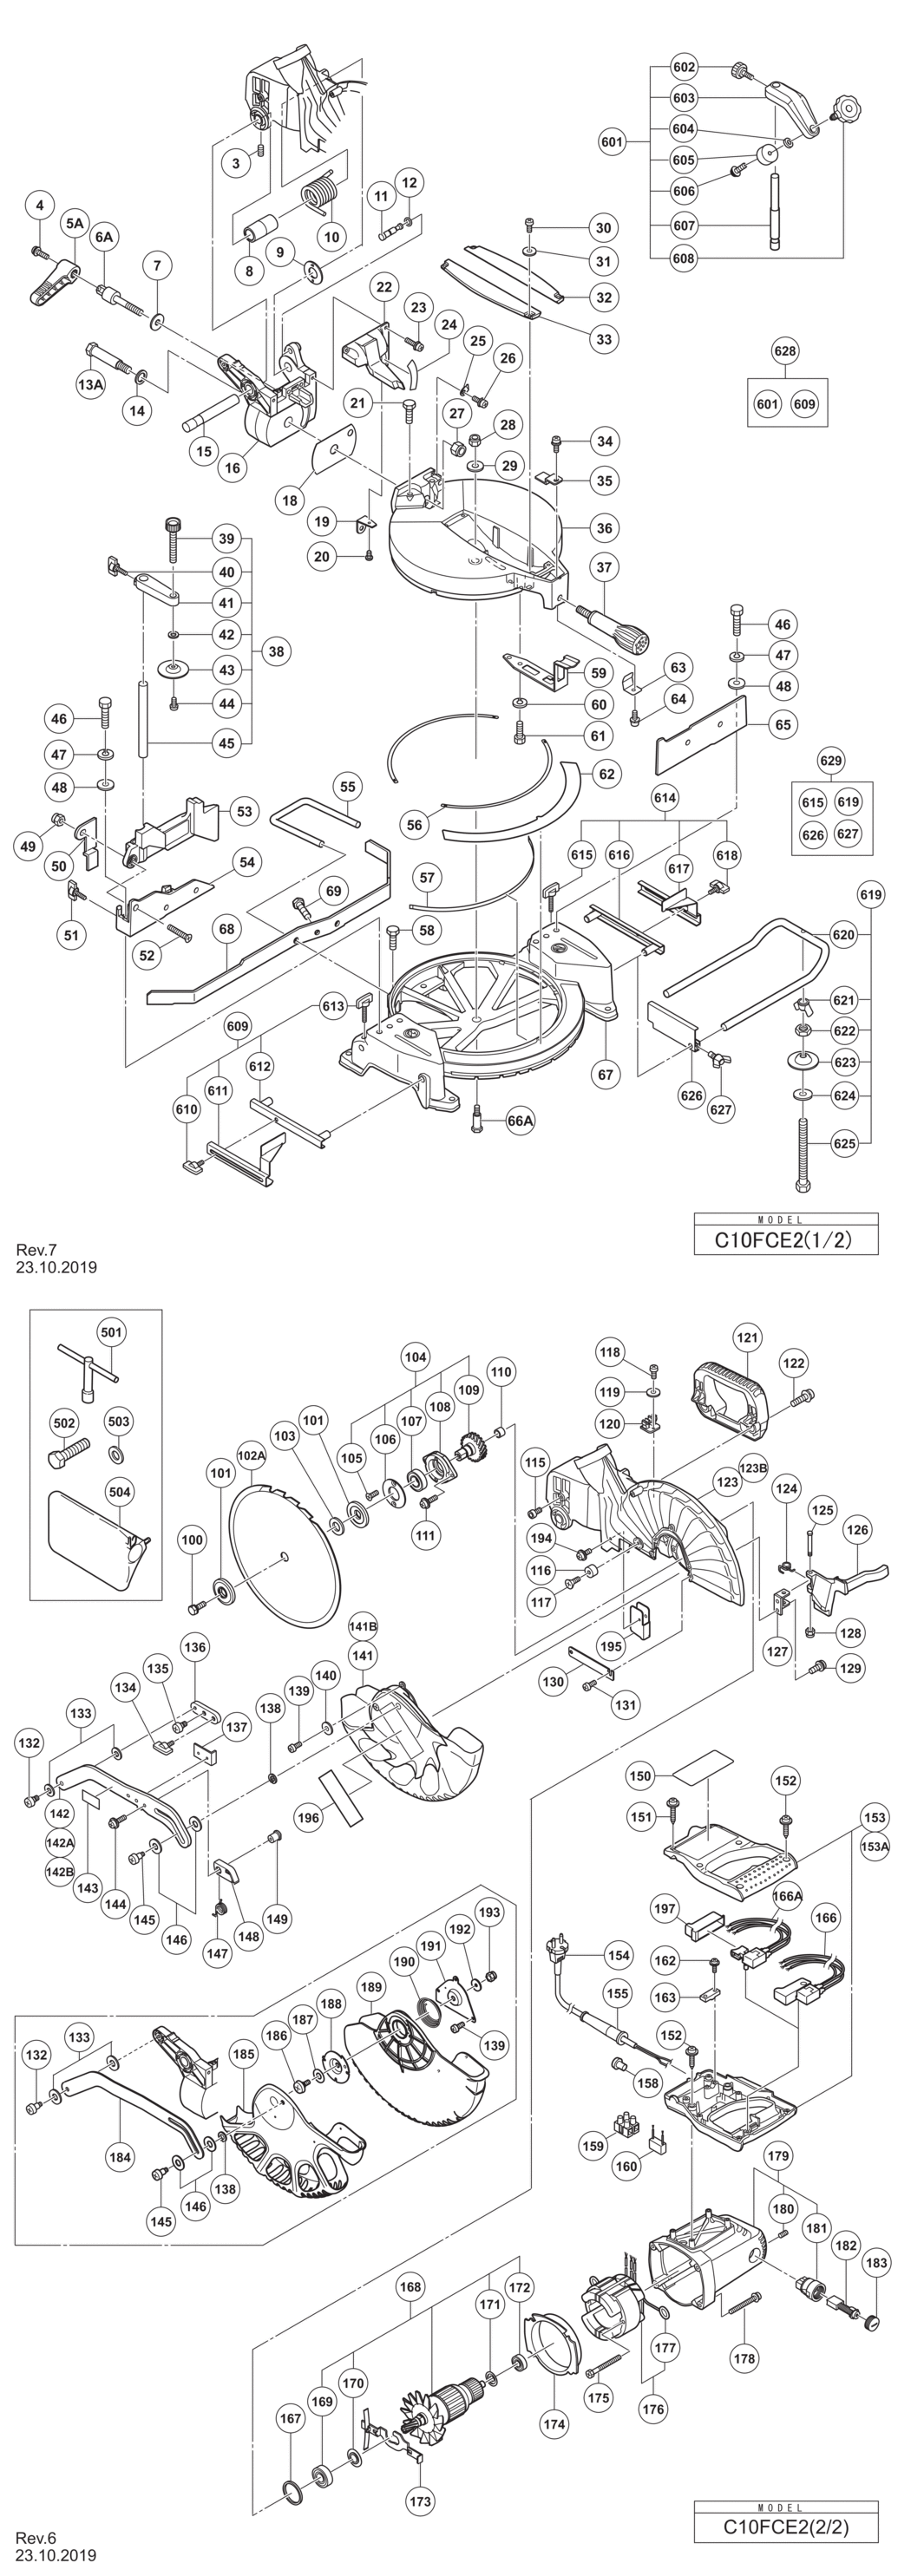 Hitachi / Hikoki C10FCE2 Miter Saw Spare Parts